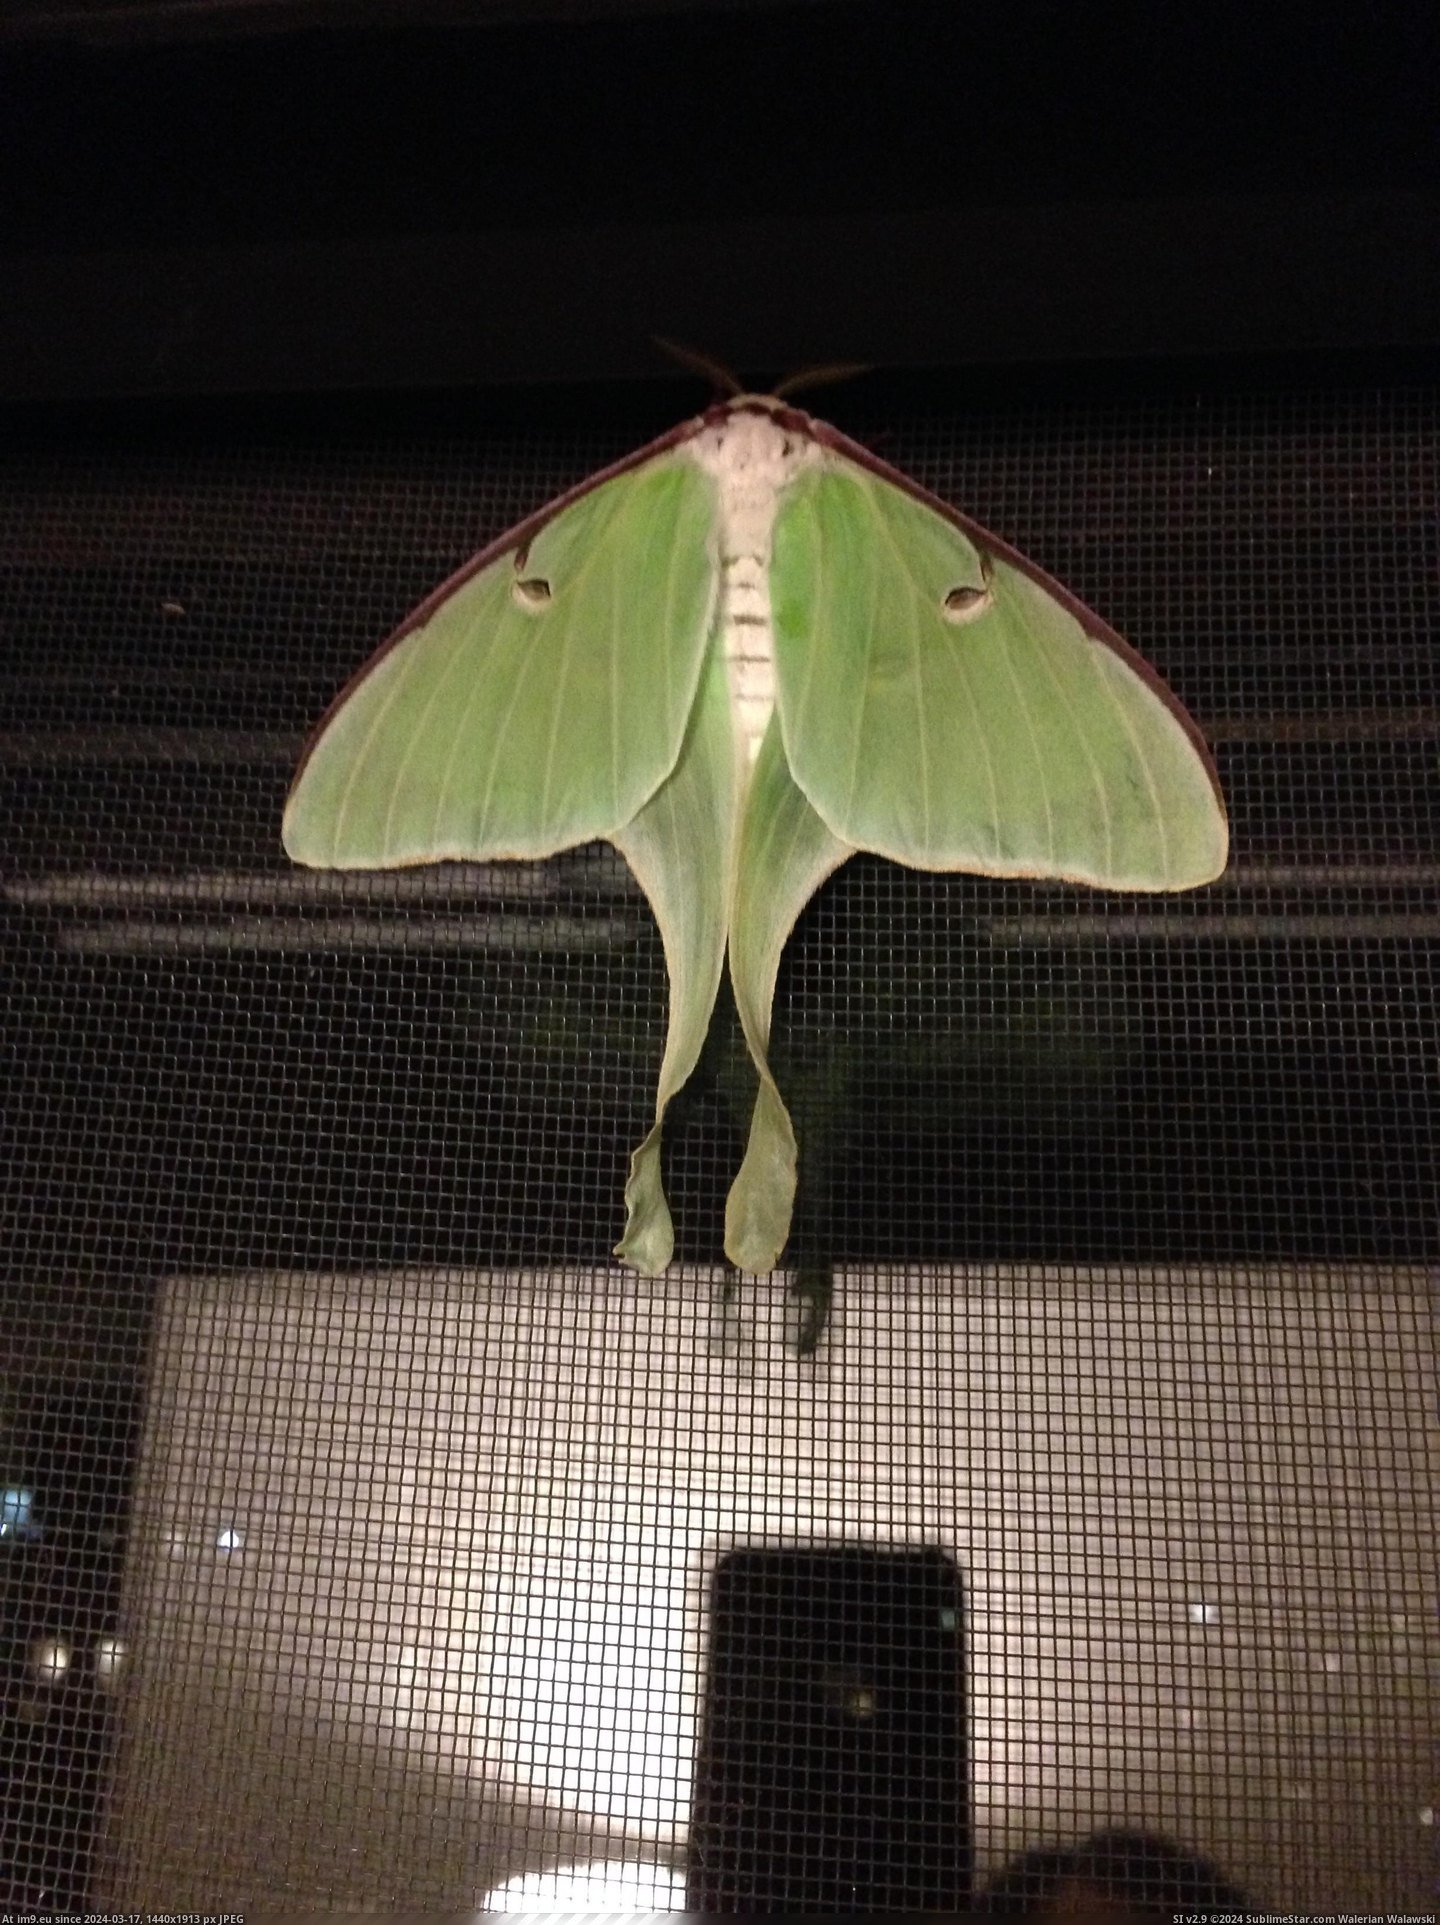 #Was #Room #Fall #Caterpillar #Pupated #Turns #Luna #Moth [Pics] I found a caterpillar last fall, and it pupated in my room. Turns out it was a luna moth! 5 Pic. (Bild von album My r/PICS favs))